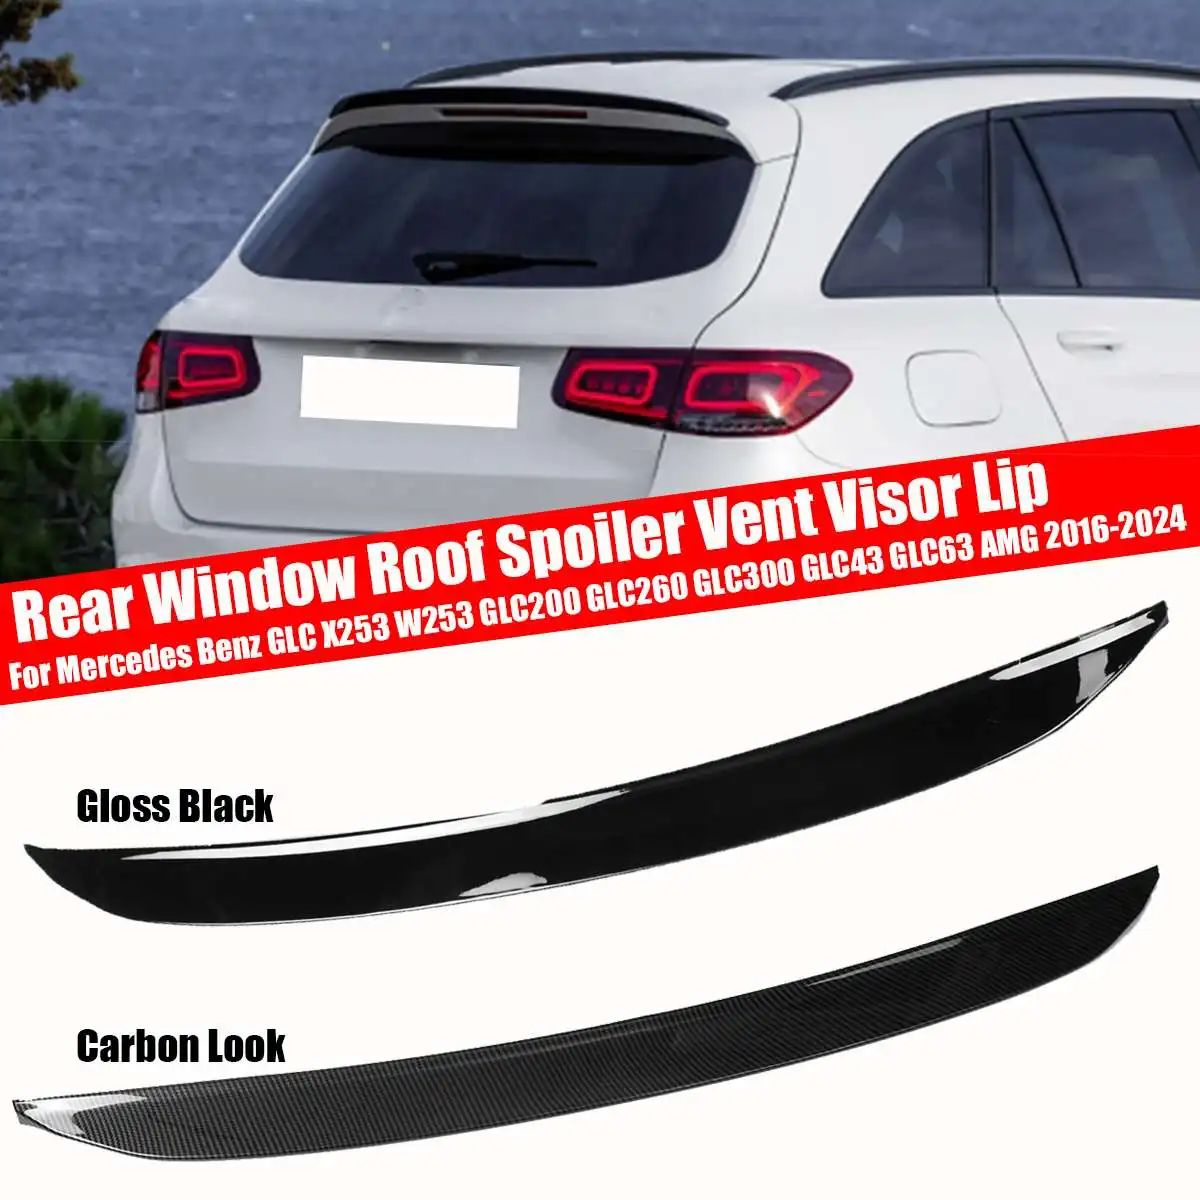 

Rear Window Roof Spoiler For Mercedes Benz GLC X253 W253 GLC200 GLC260 GLC300 AMG SUV 2016-2024 Sun Rain Shade Vent Visor Lip